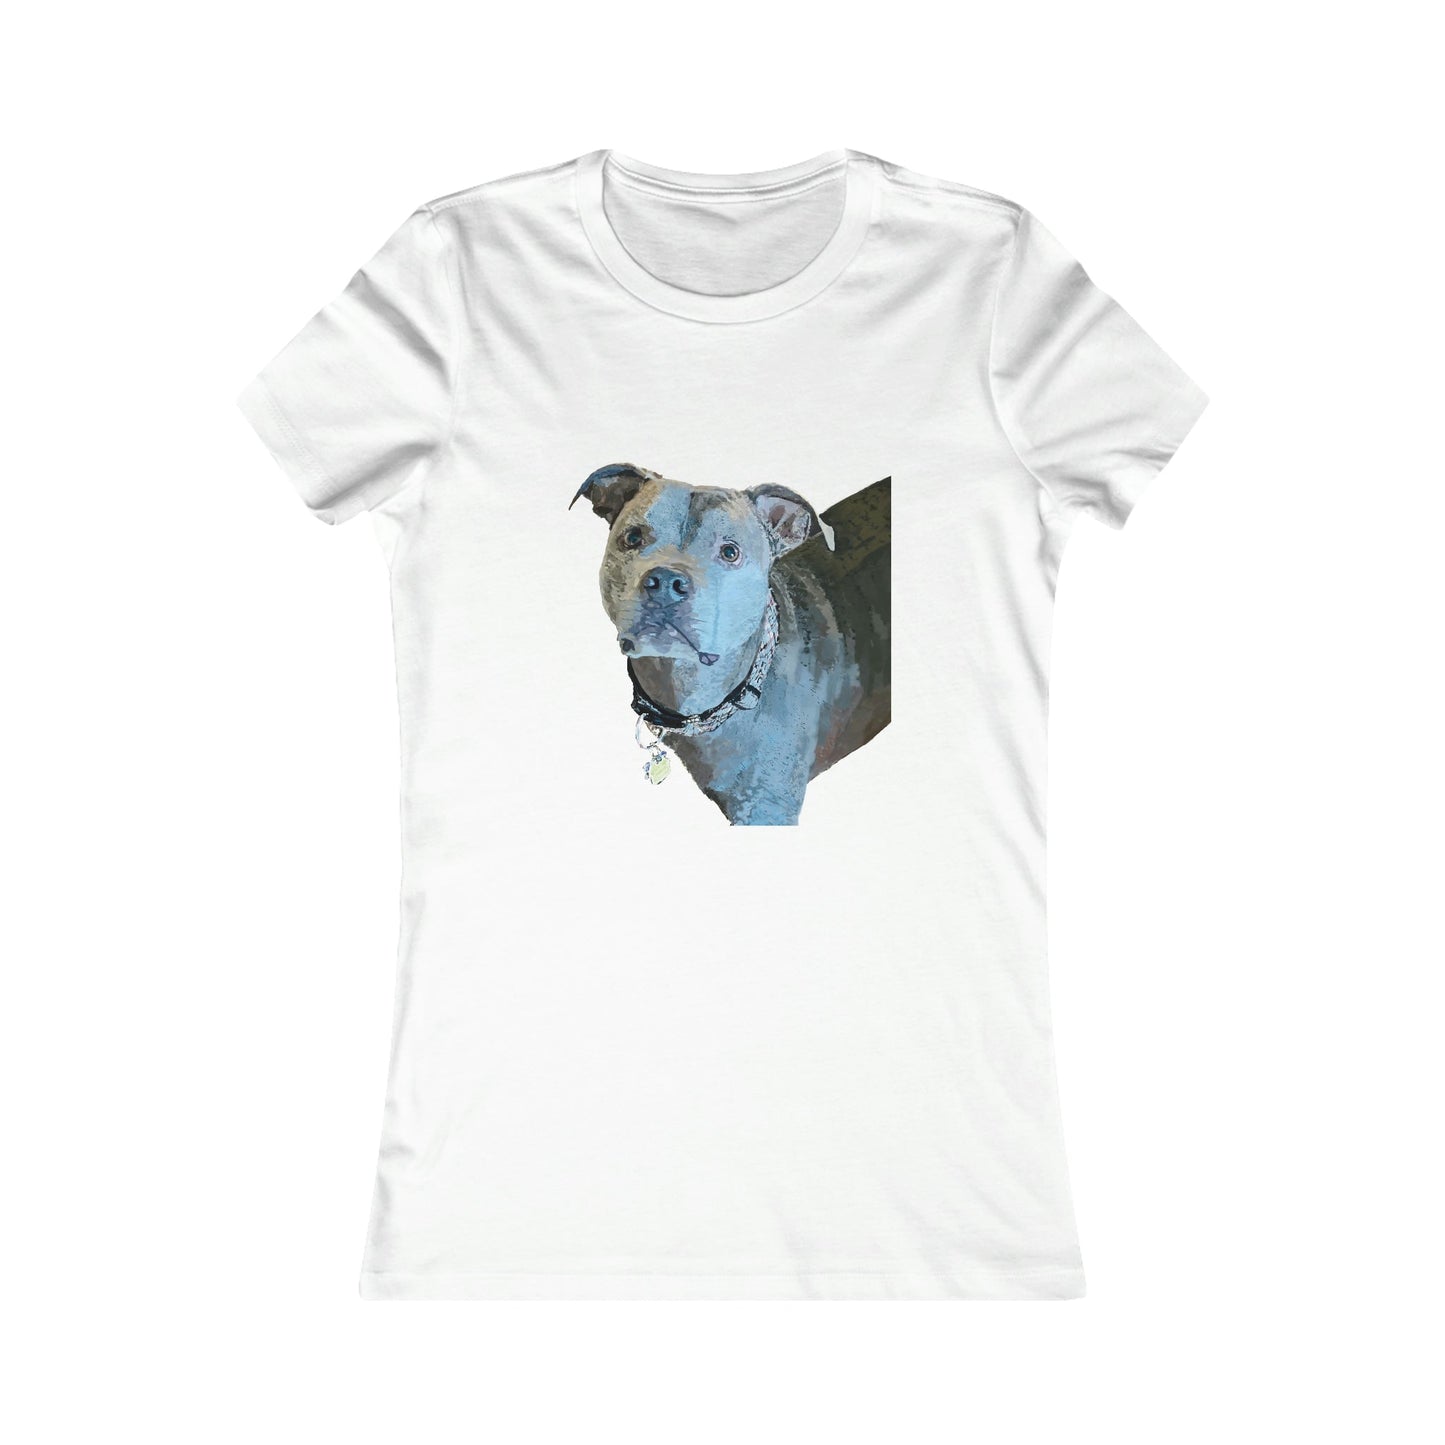 “Diesel” Pit Bull T-shirt - Blue Cava